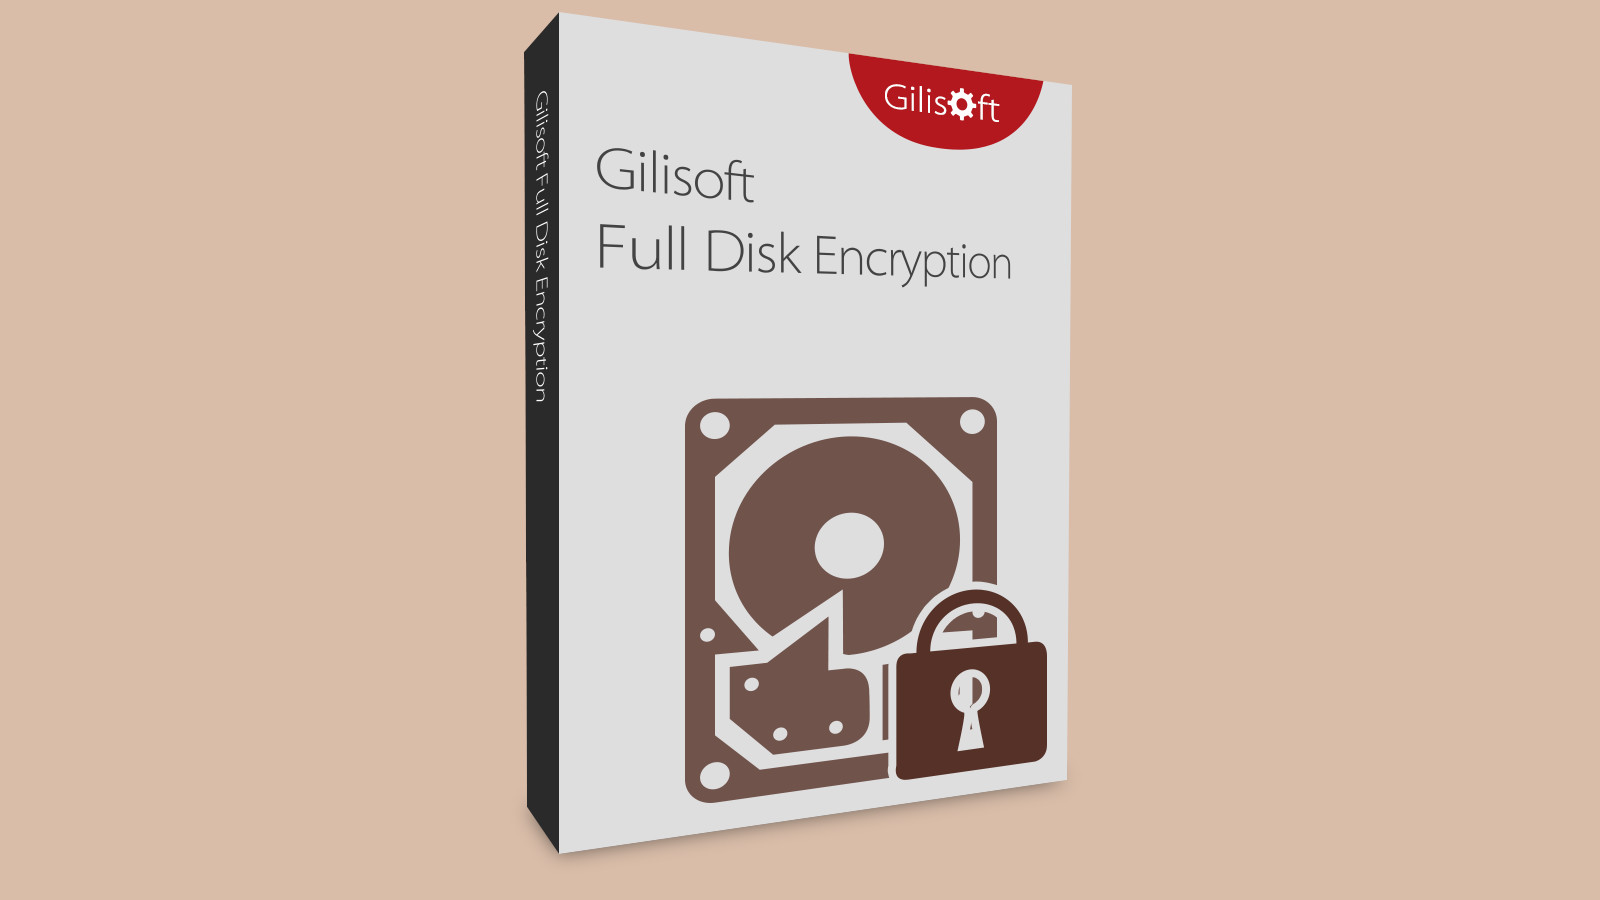 Gilisoft Full Disk Encryption CD Key 19.72 $